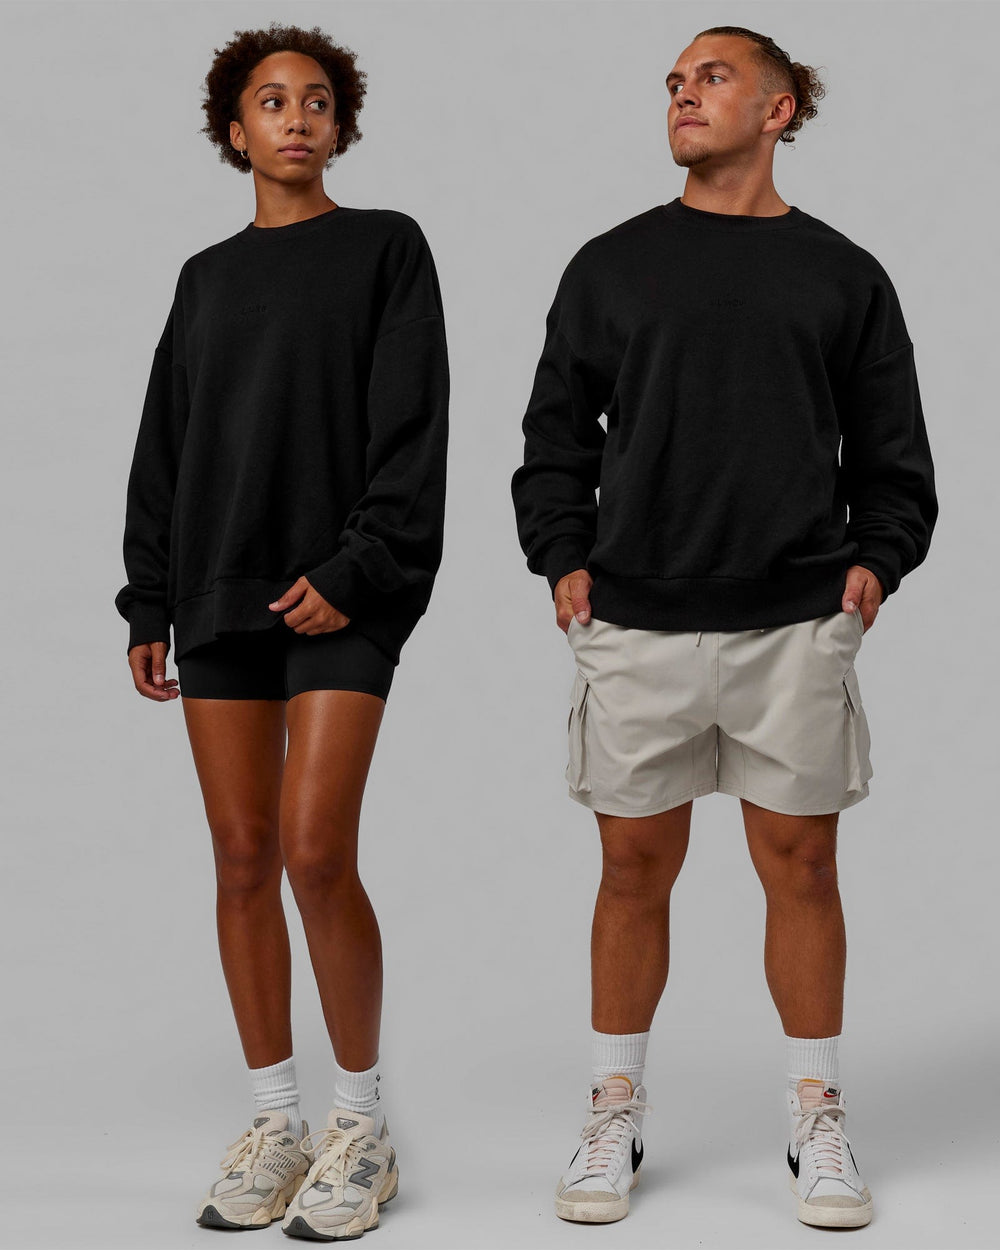 Duo wearing Unisex MVP Sweater Oversize - Black